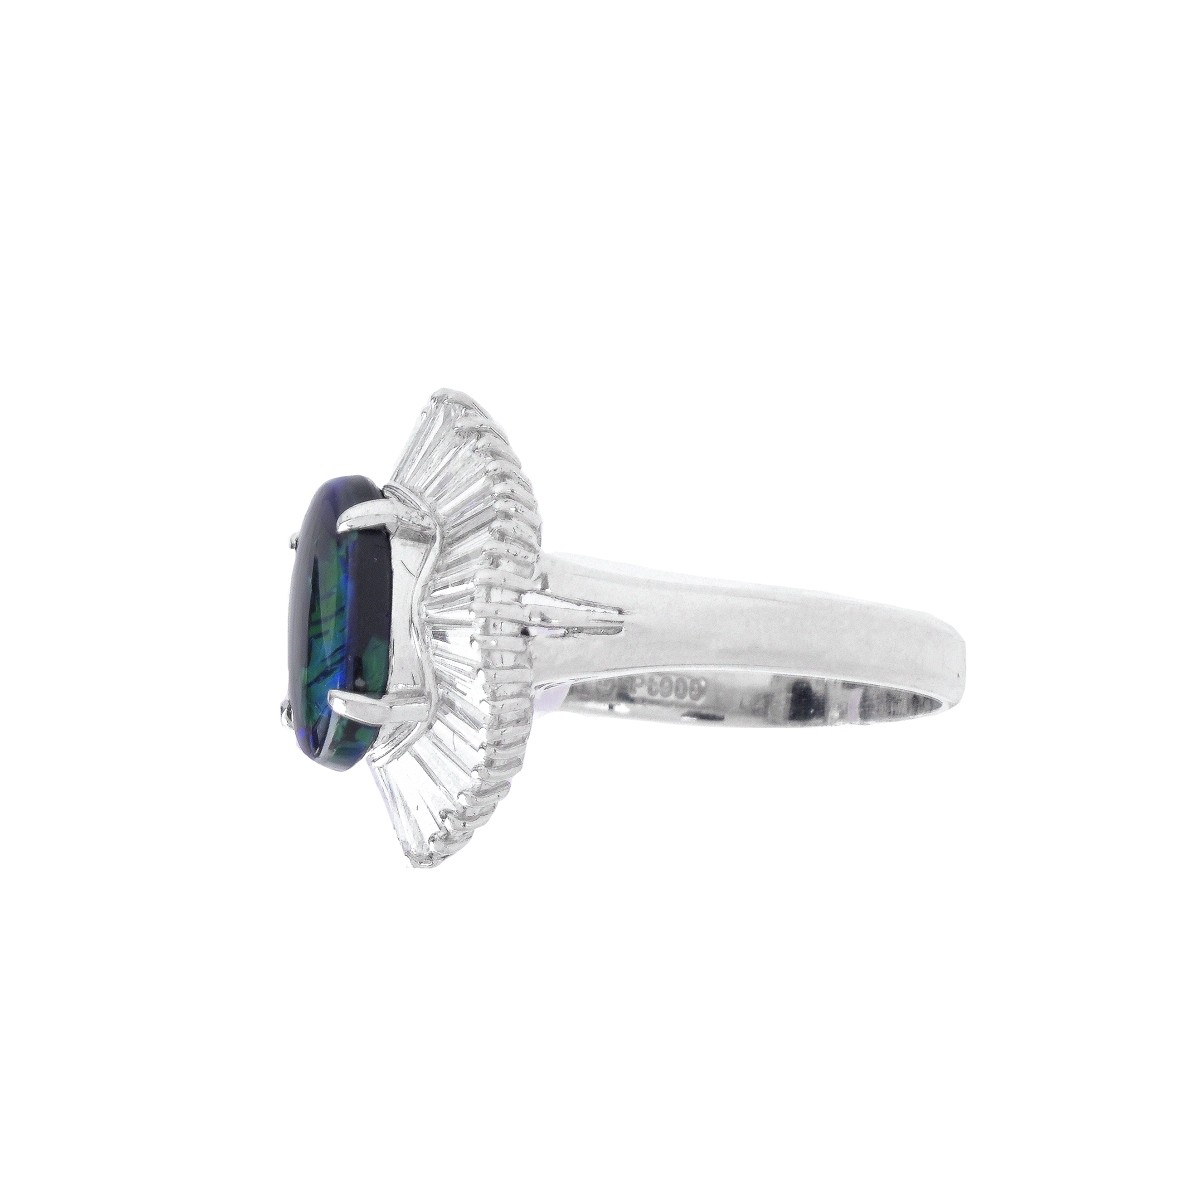 Black Opal and Diamond Platinum Ring